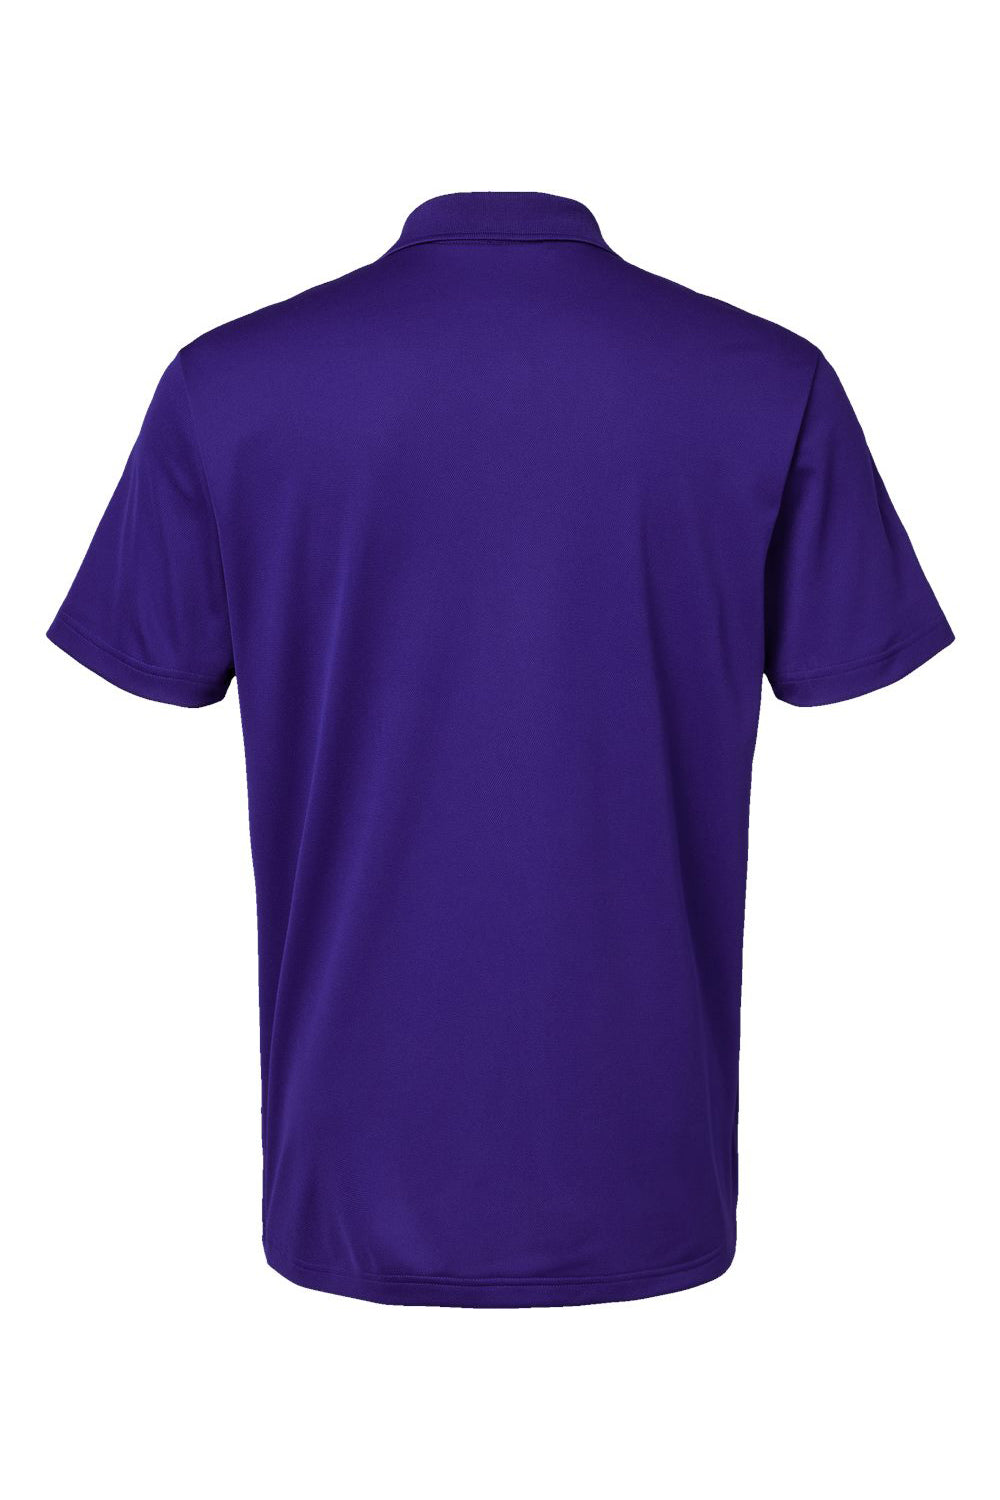 Adidas A430 Mens Basic Short Sleeve Polo Shirt Collegiate Purple Flat Back